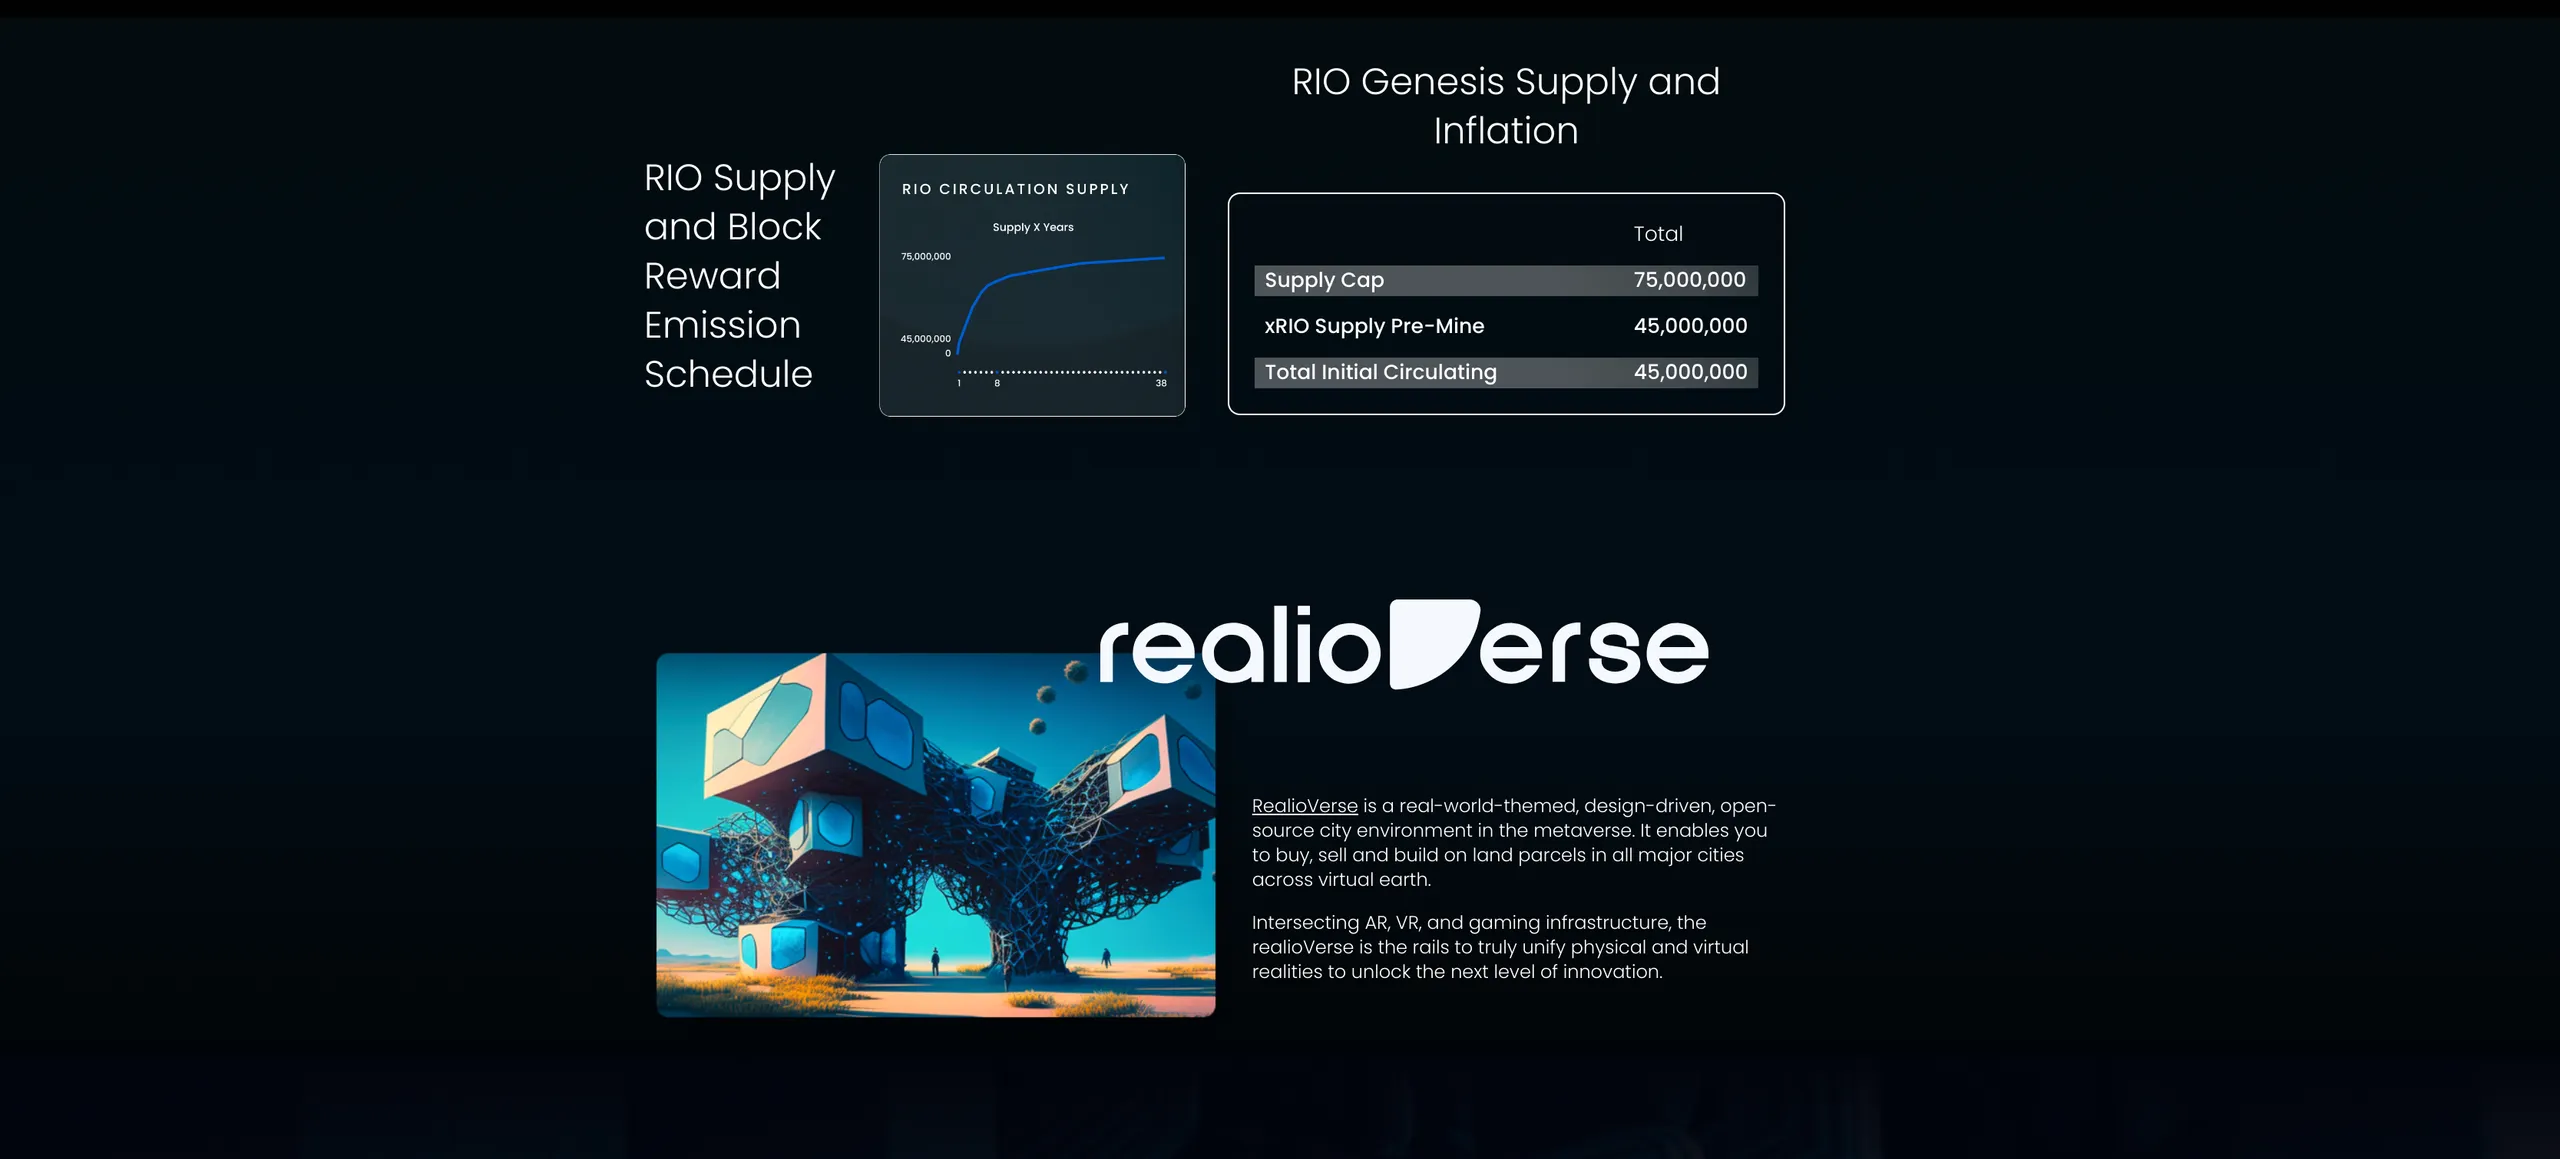 realio verse & genesis supply screenshot 